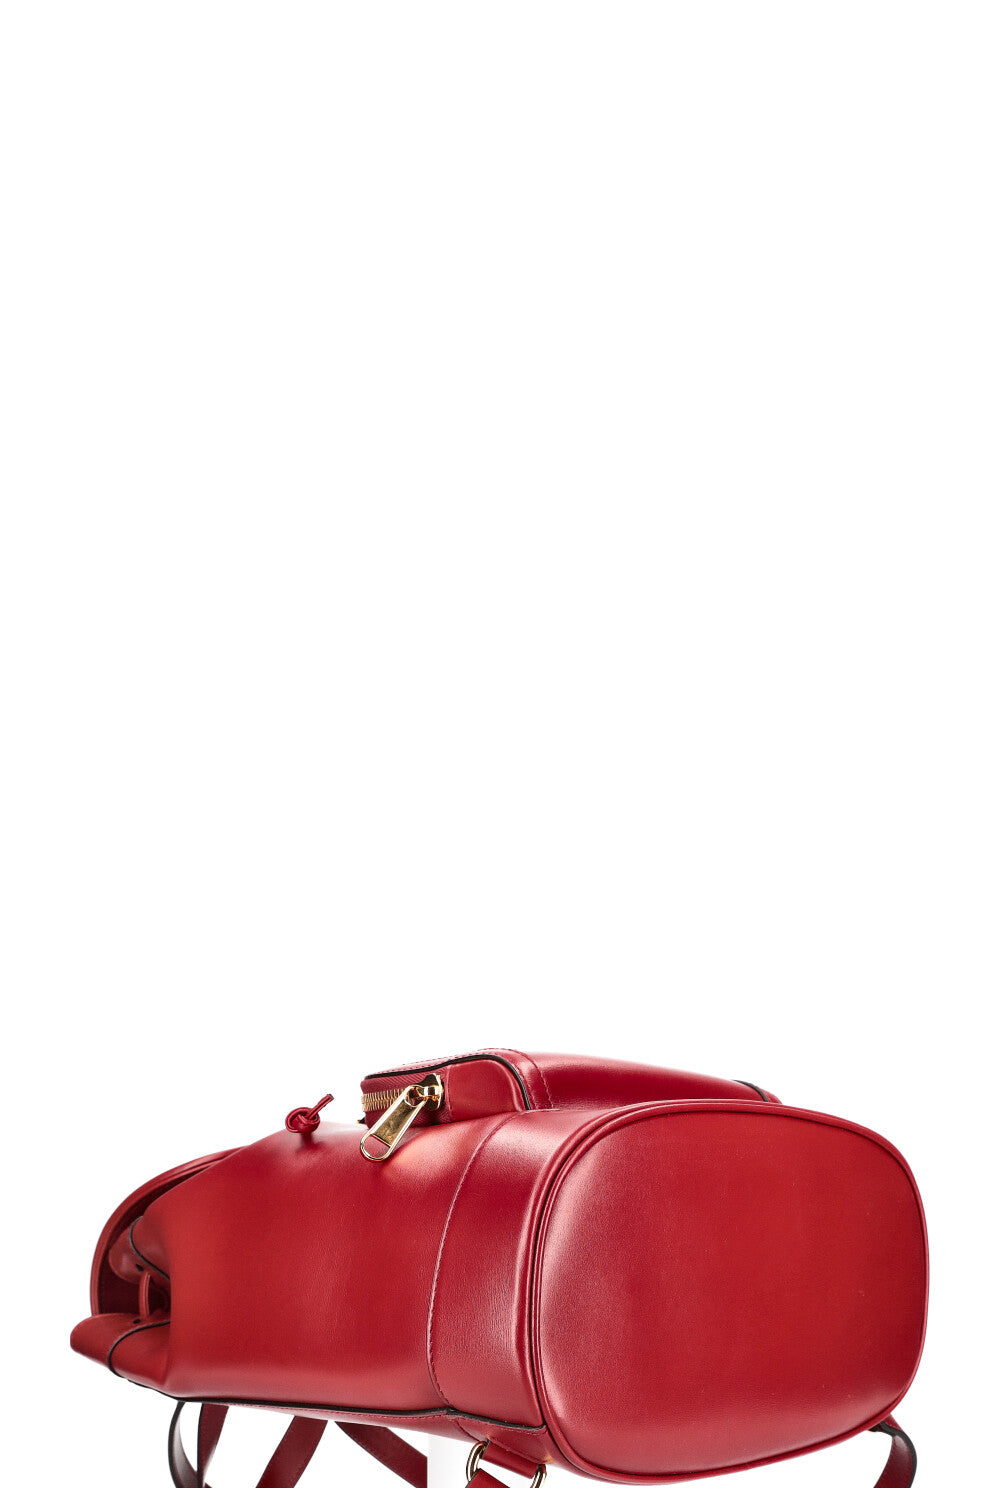 GUCCI 1955 Horsebit Backpack Red